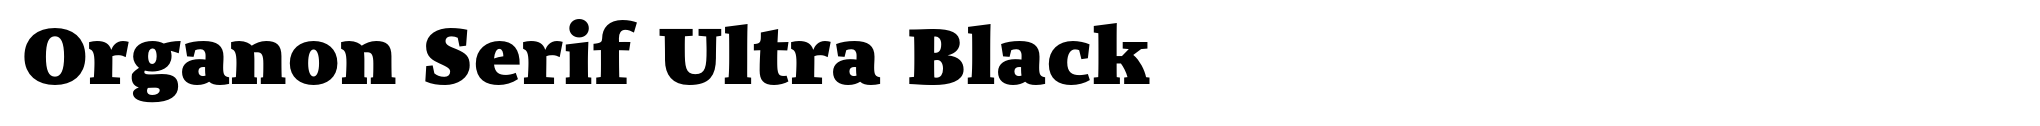 Organon Serif Ultra Black image